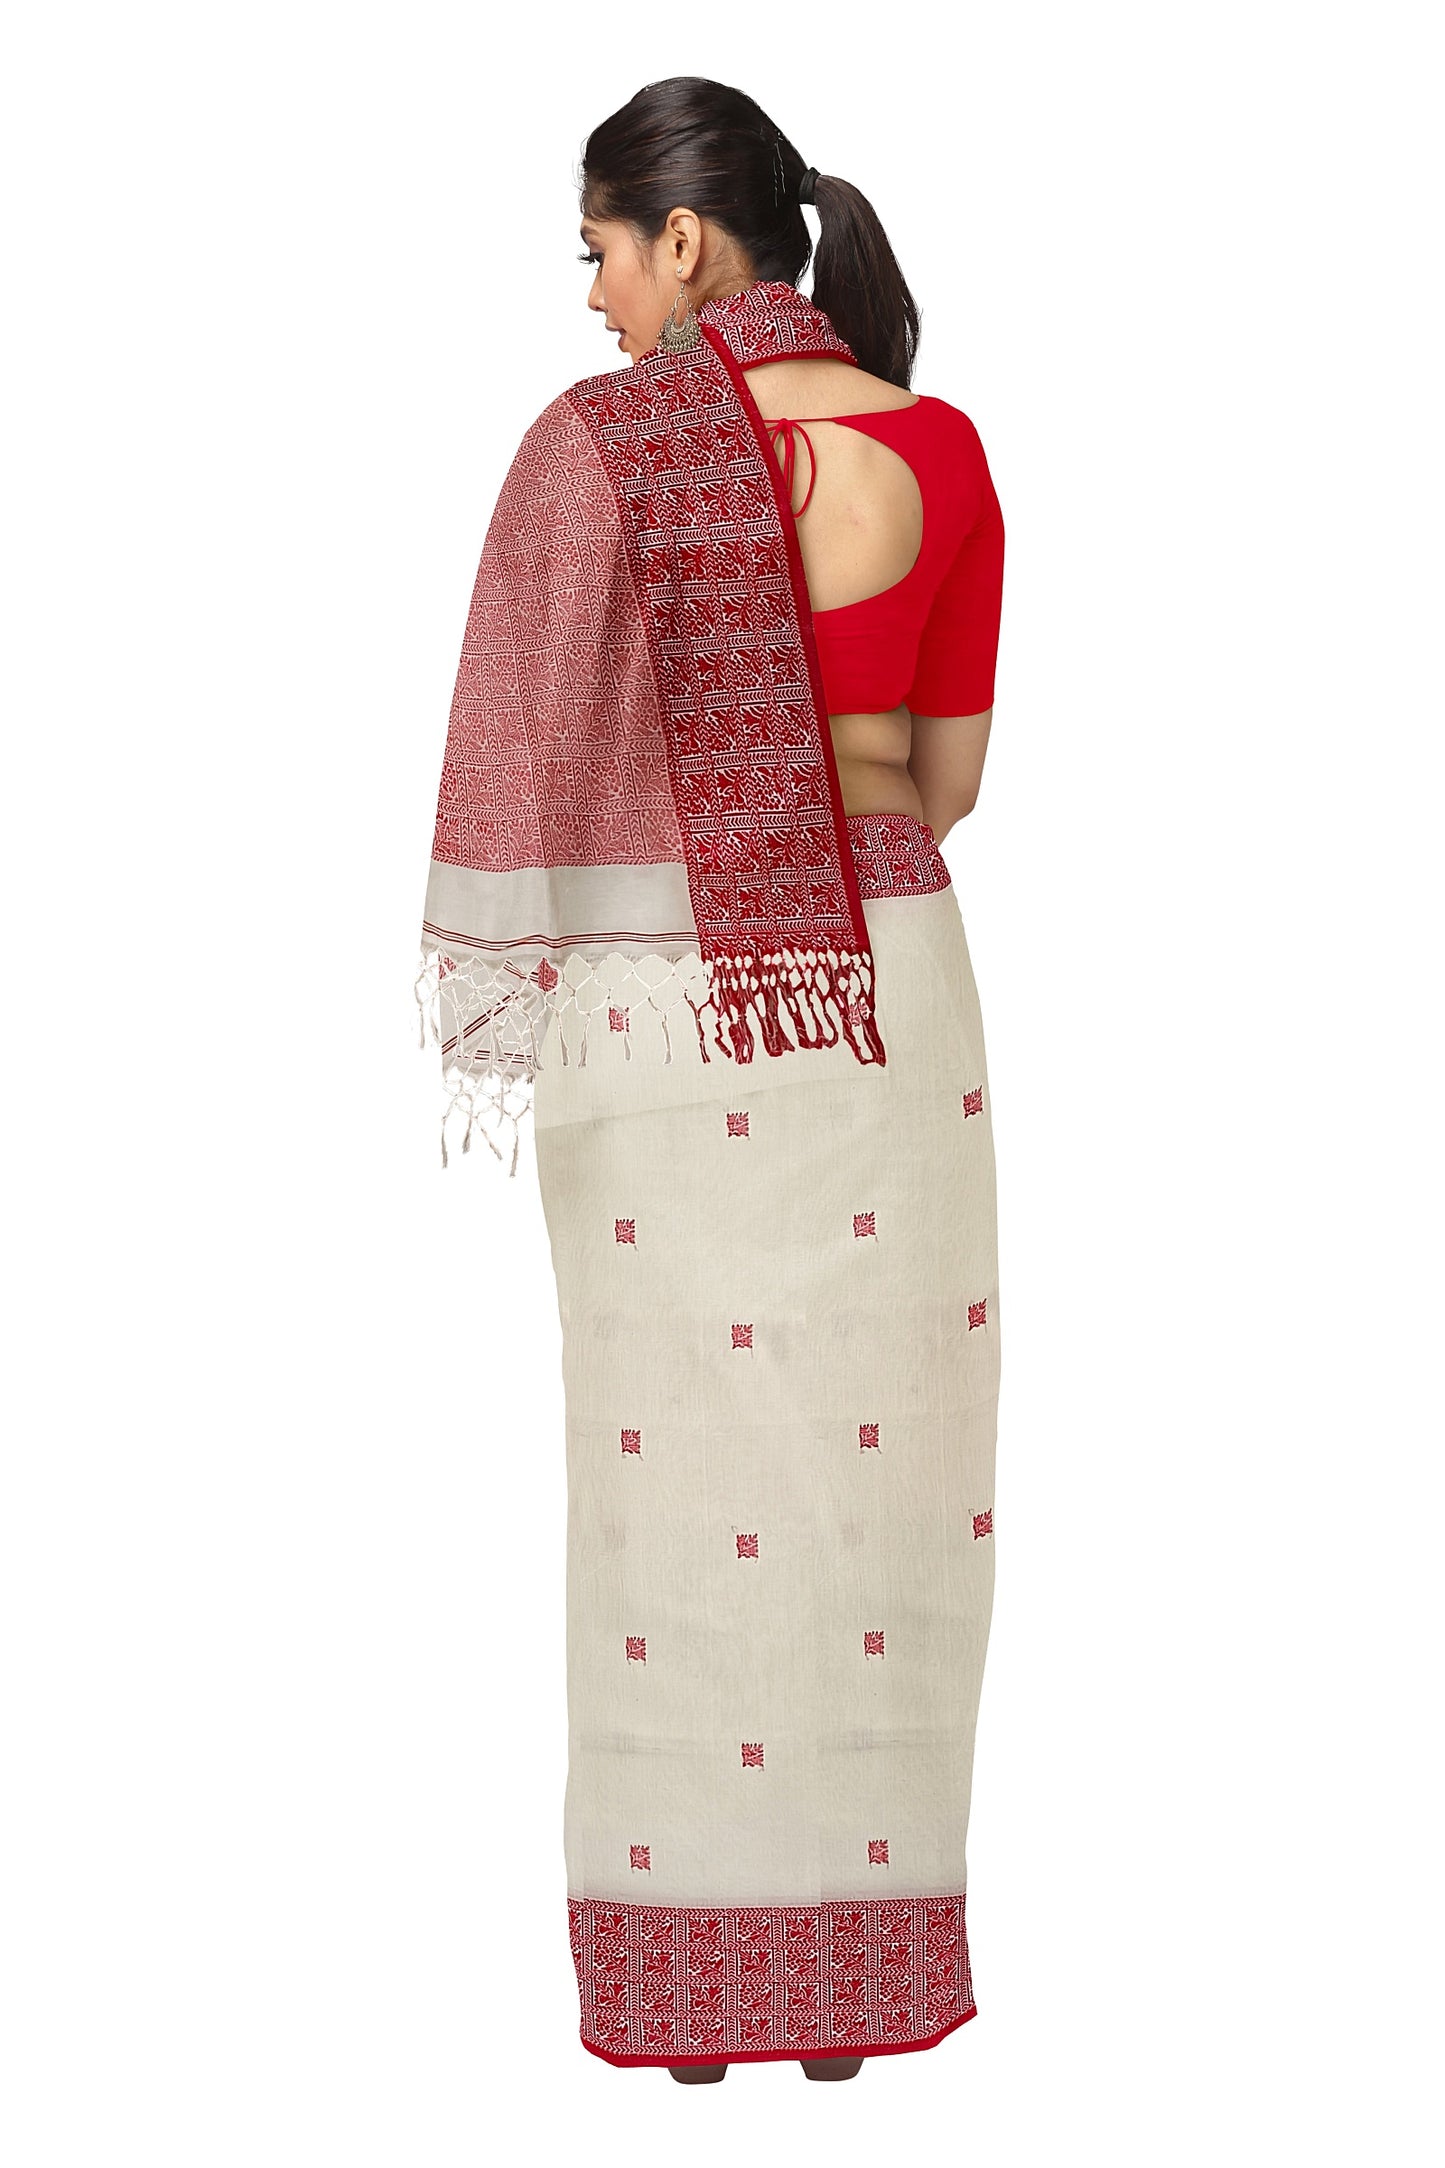 White & Red Premium Quality Handloom Soft Cotton Saree